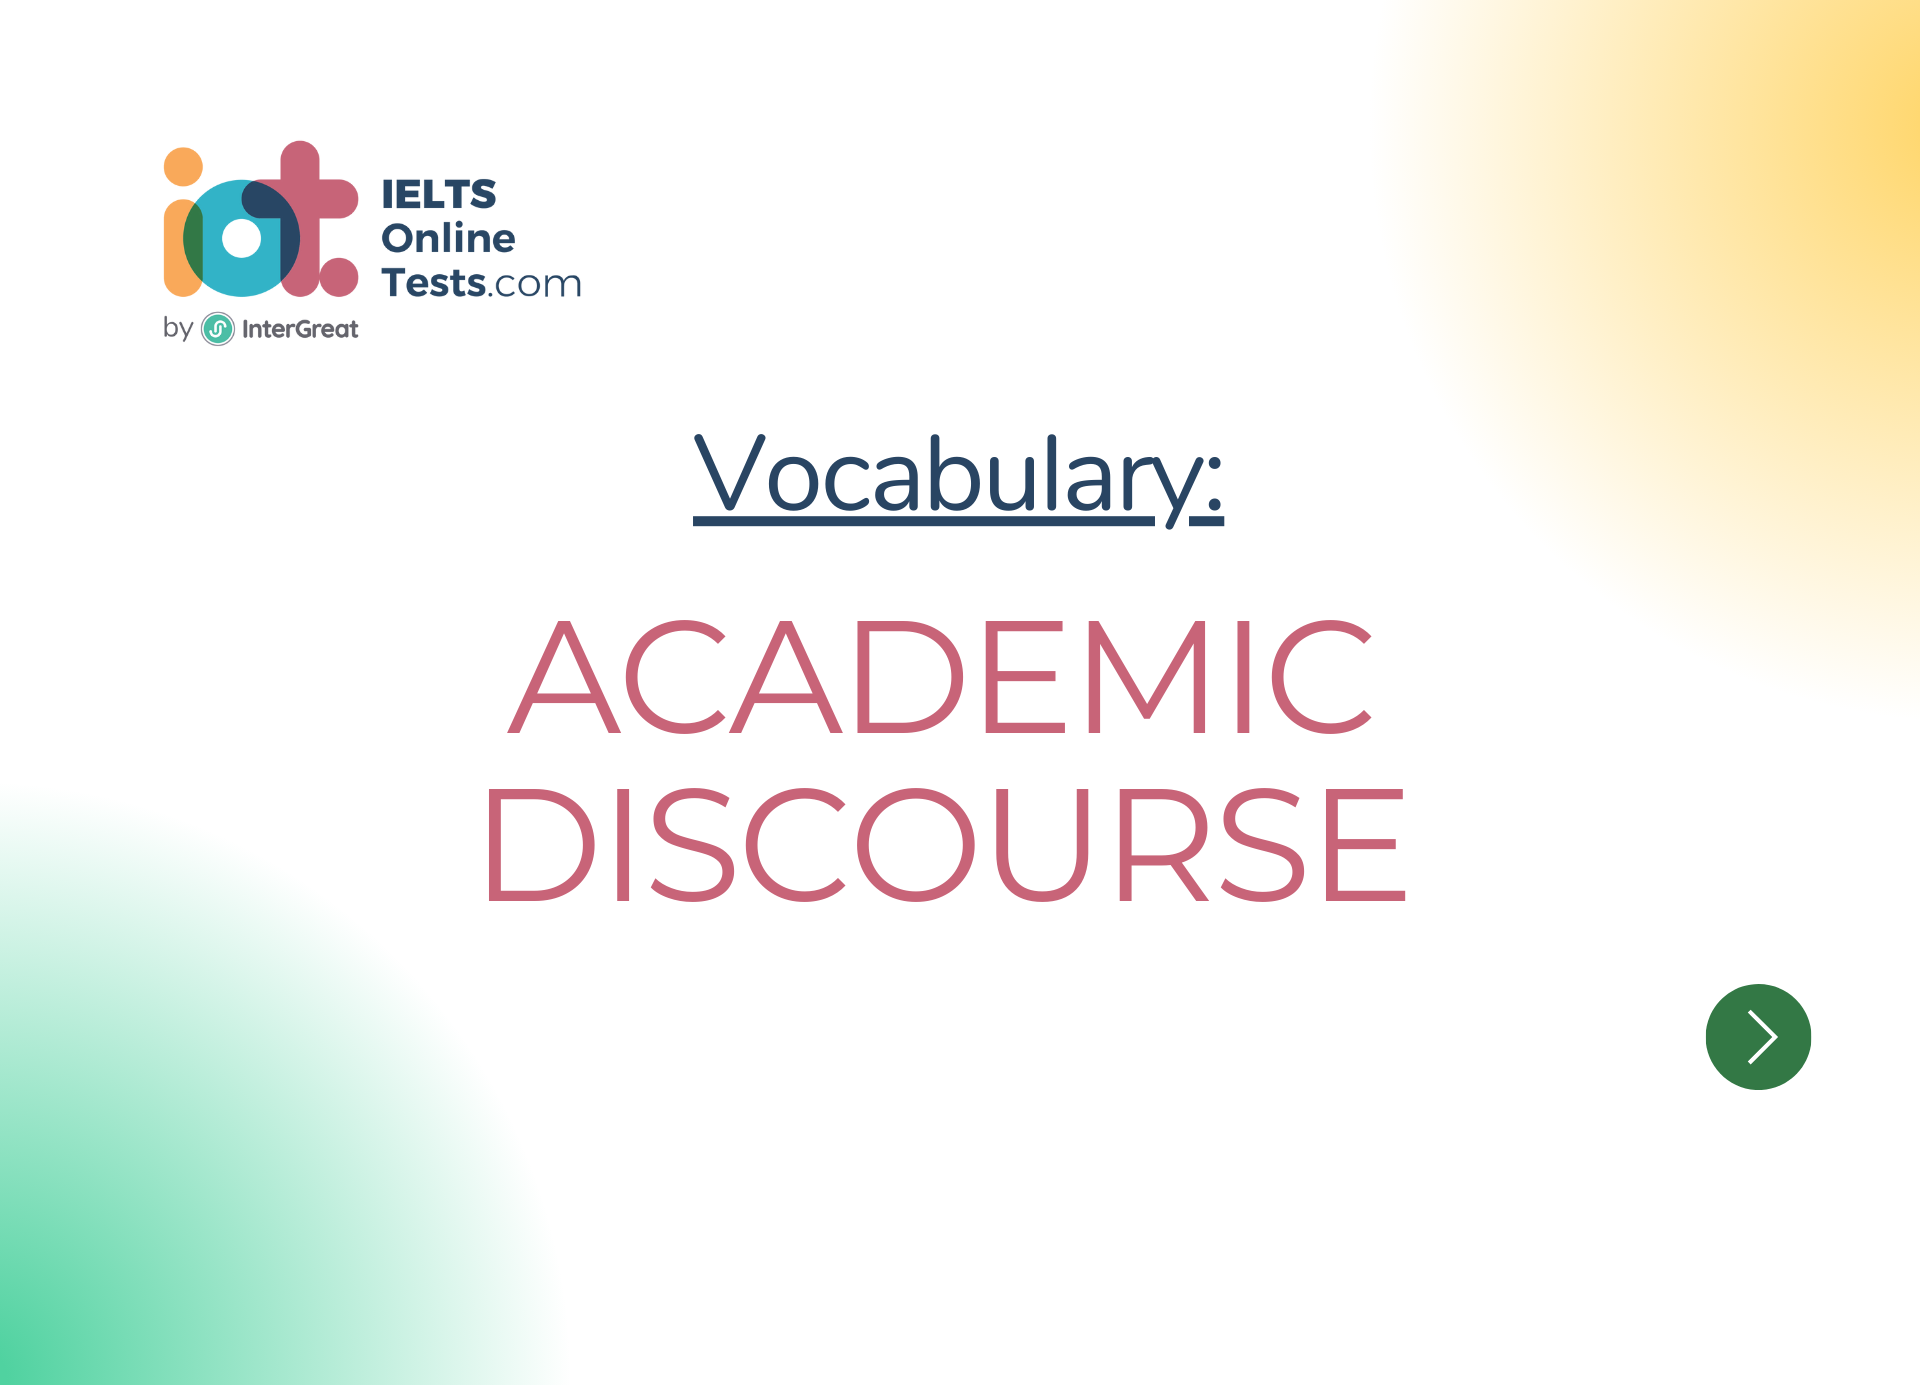 Nghị luận học thuật (Academic discourse)